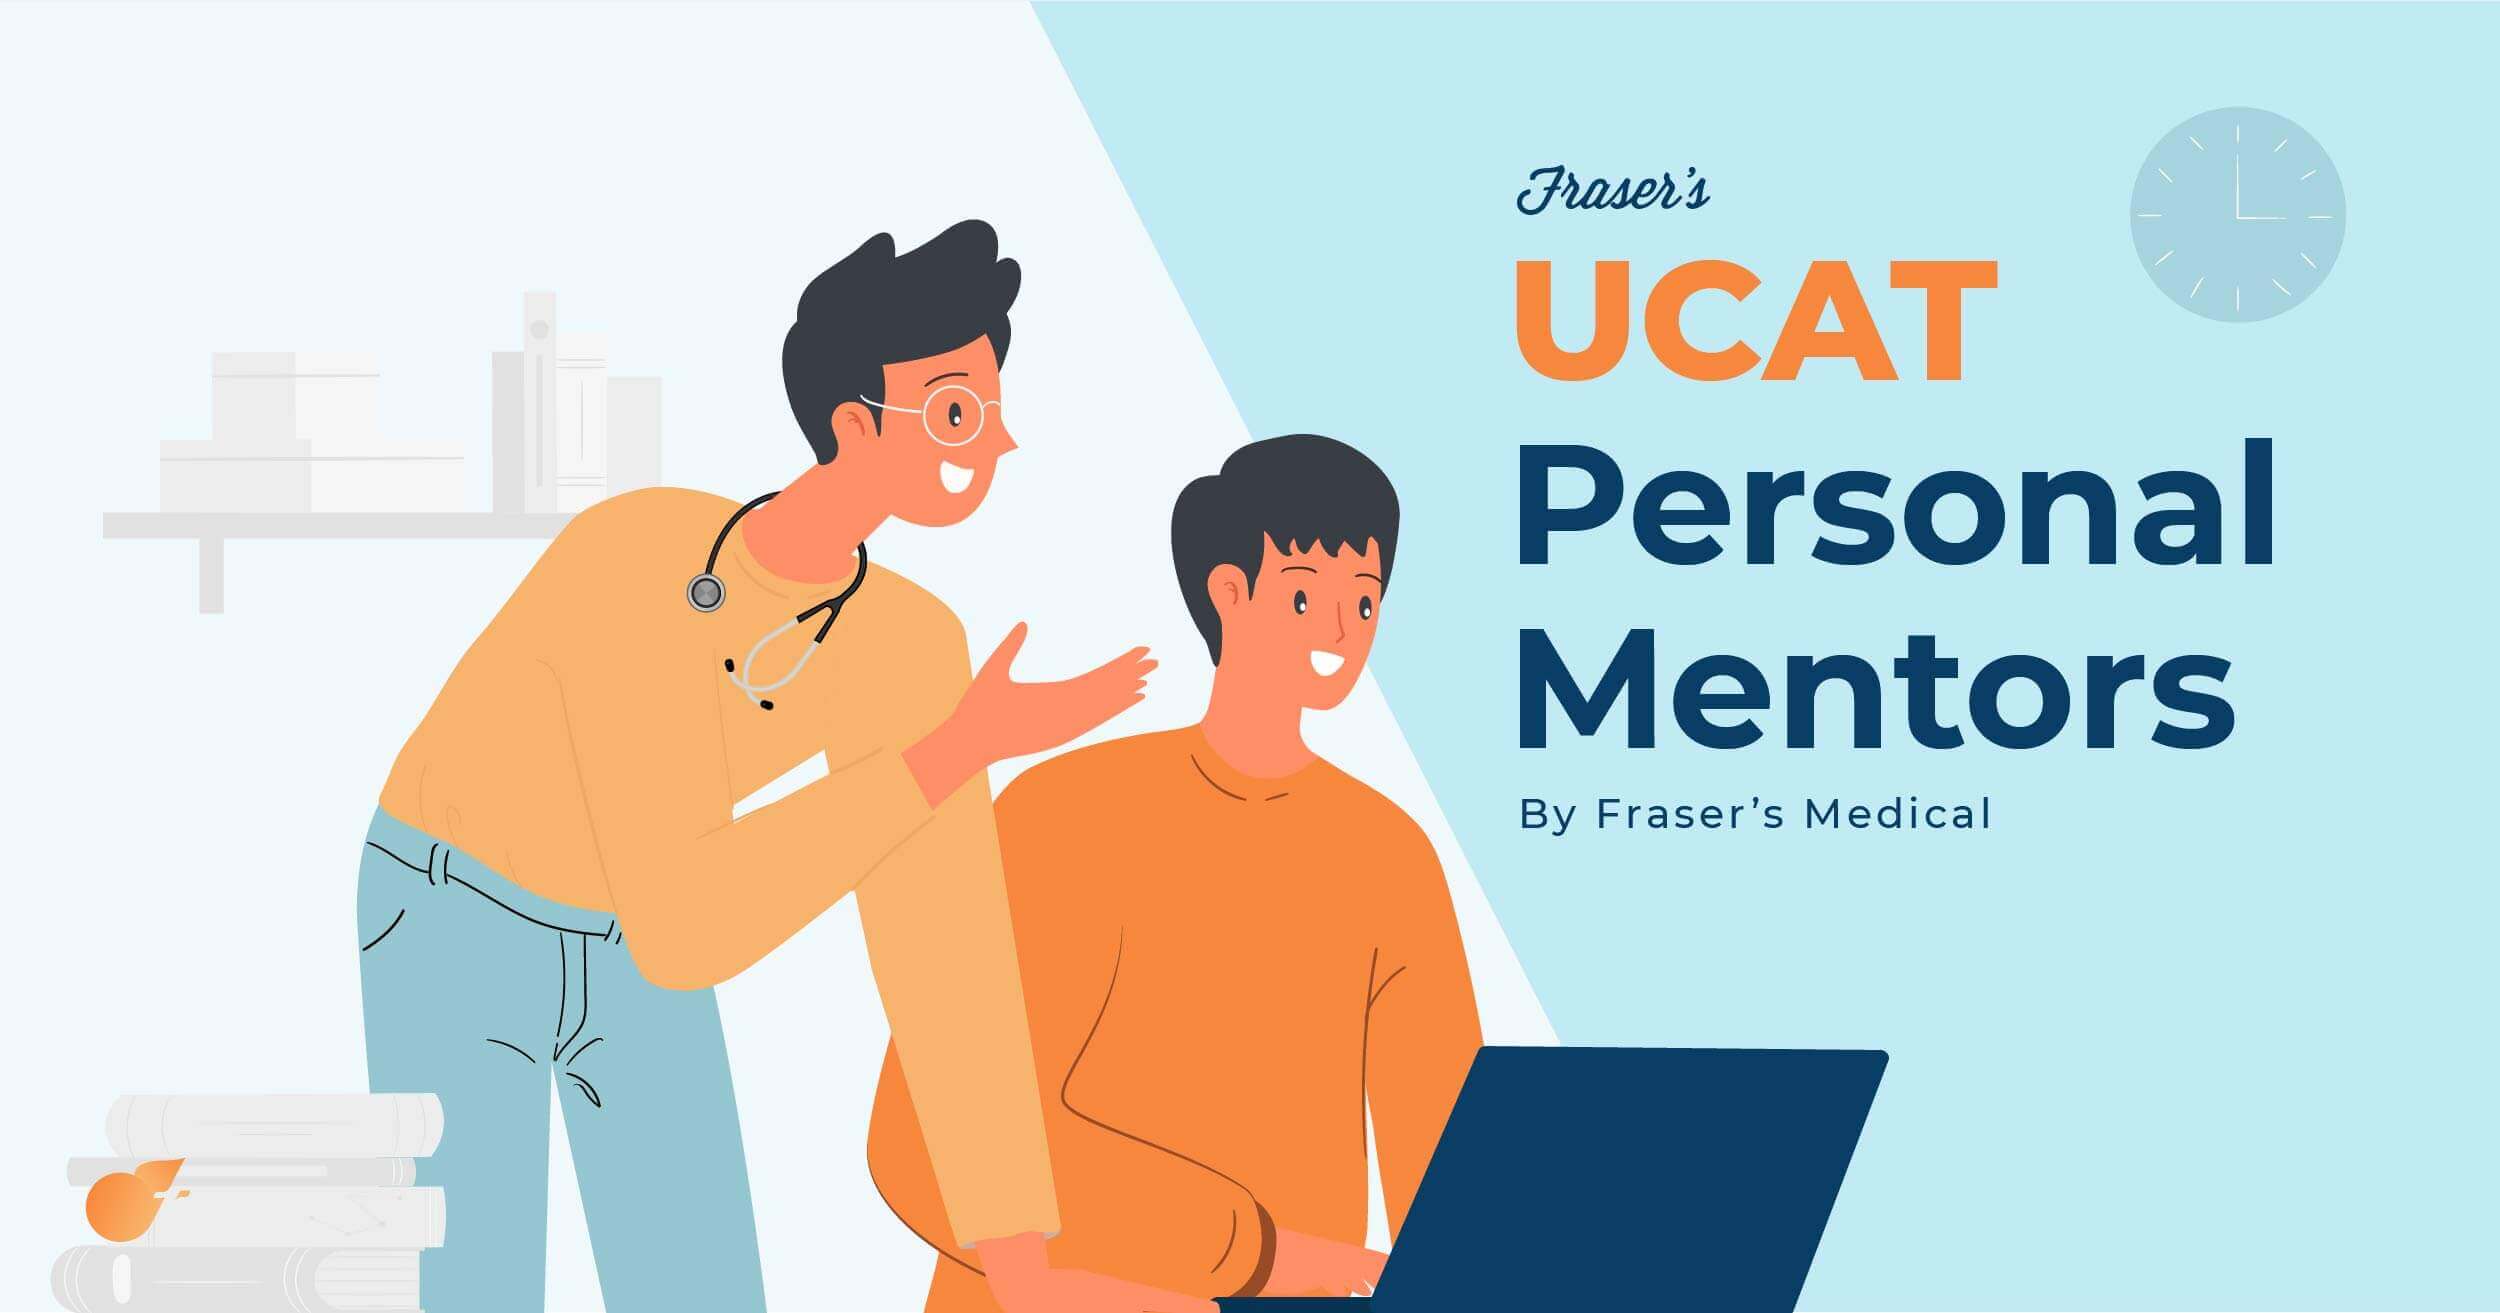 Frasers UCAT Personal Mentors